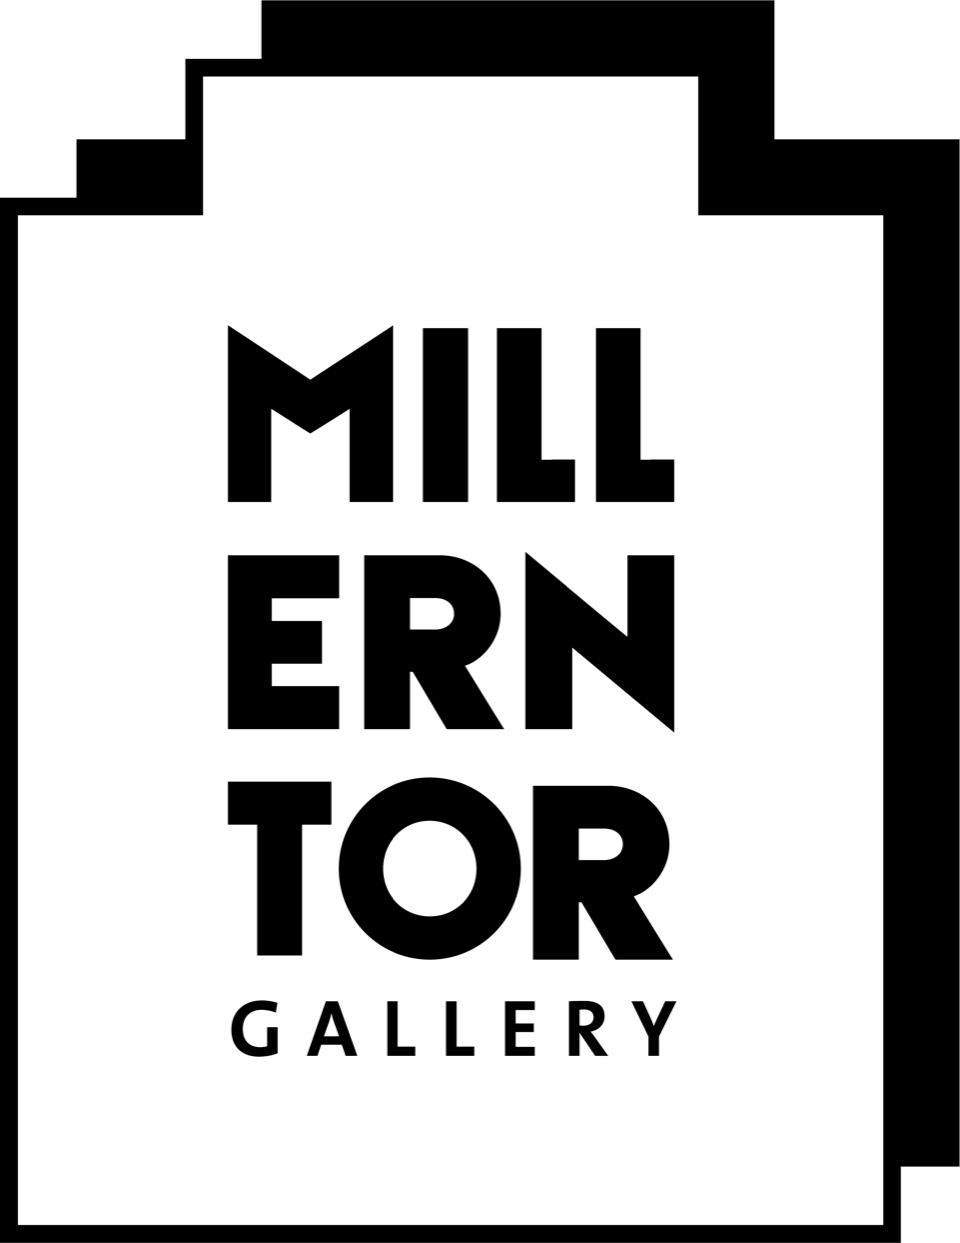 Millerntorgallery x David Shillinglaw